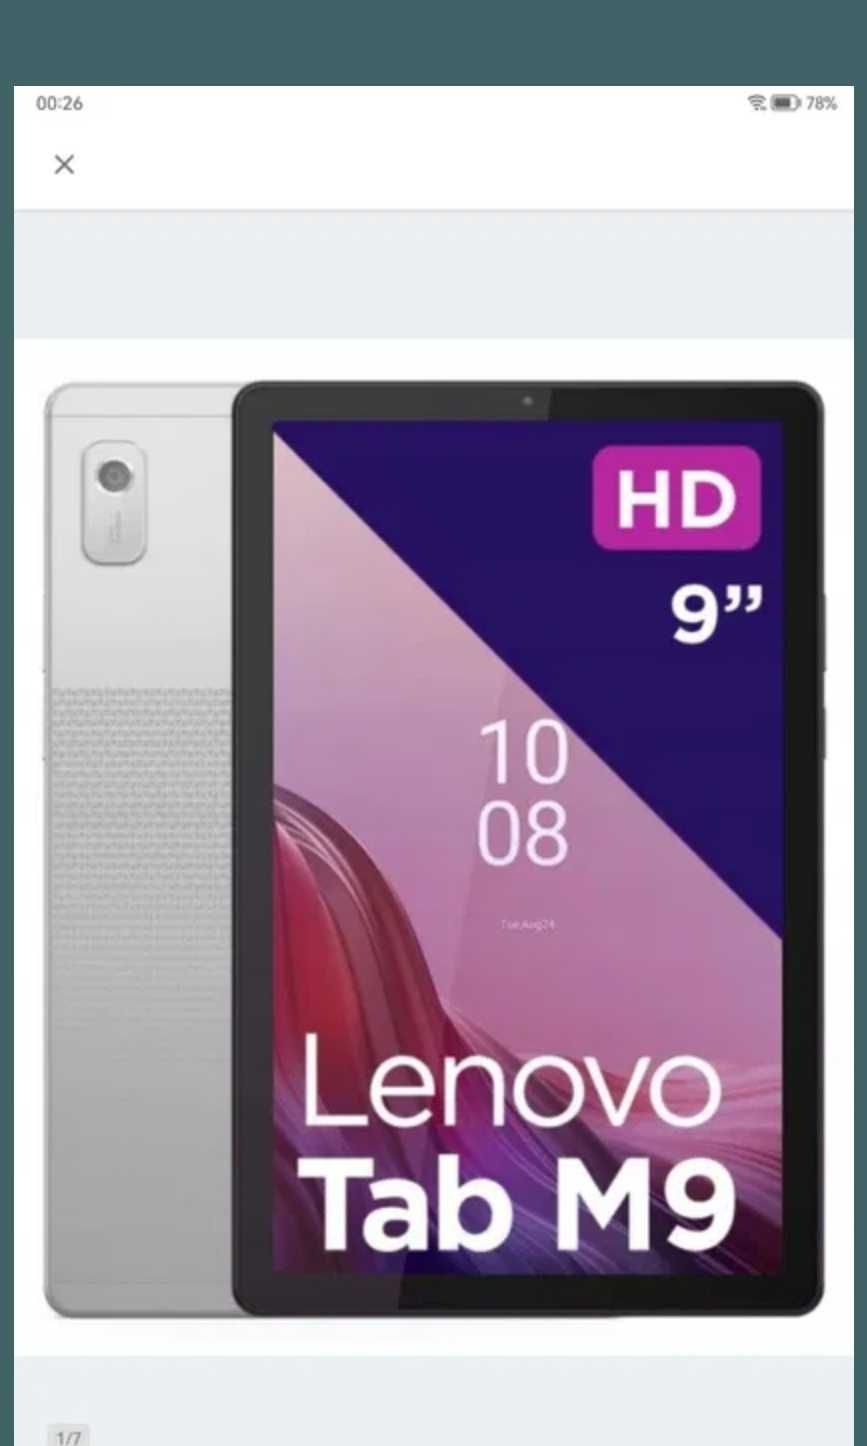 IGŁA Tablet Lenovo m9 Gwarancja. Android 13